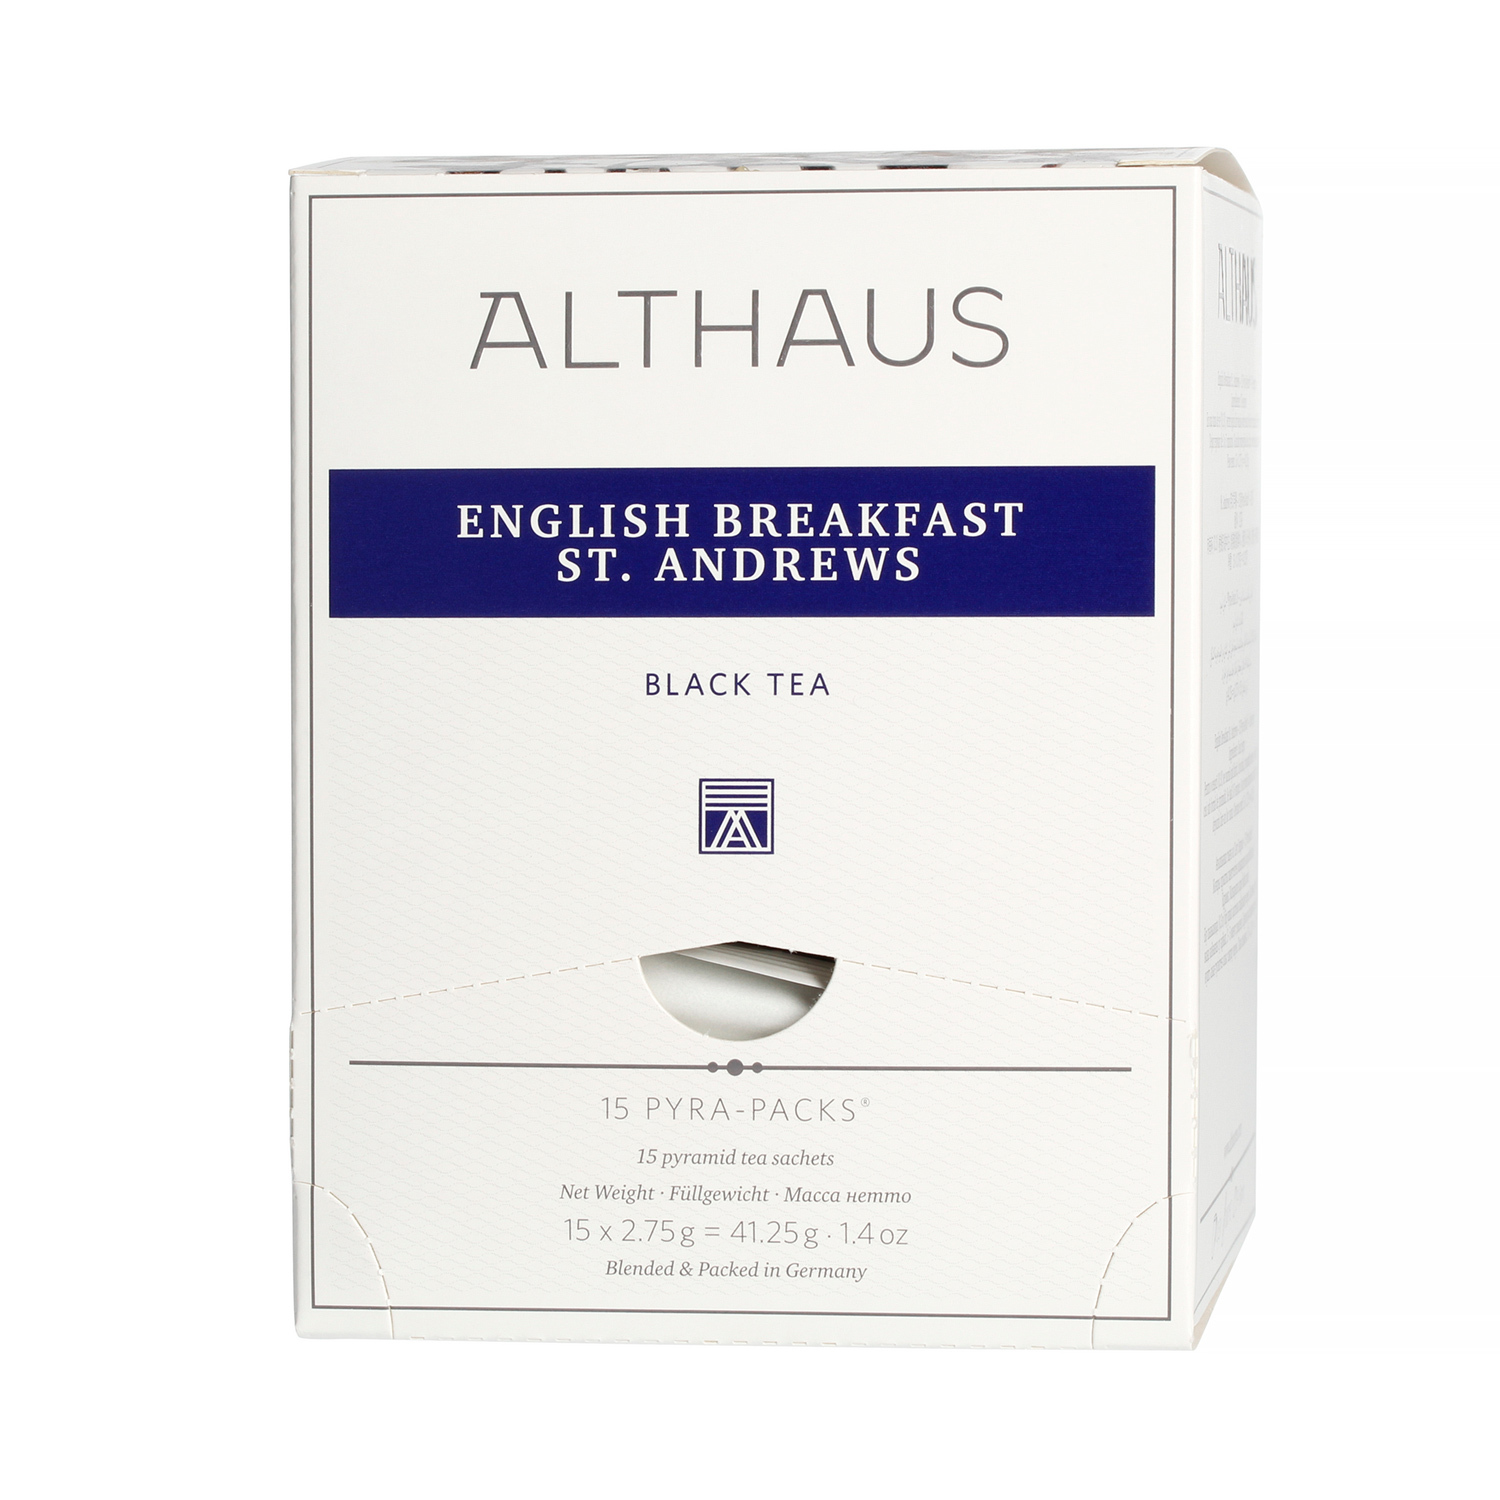 Althaus - English Breakfast St. Andrews Pyra Pack - 15 Tea Pyramids